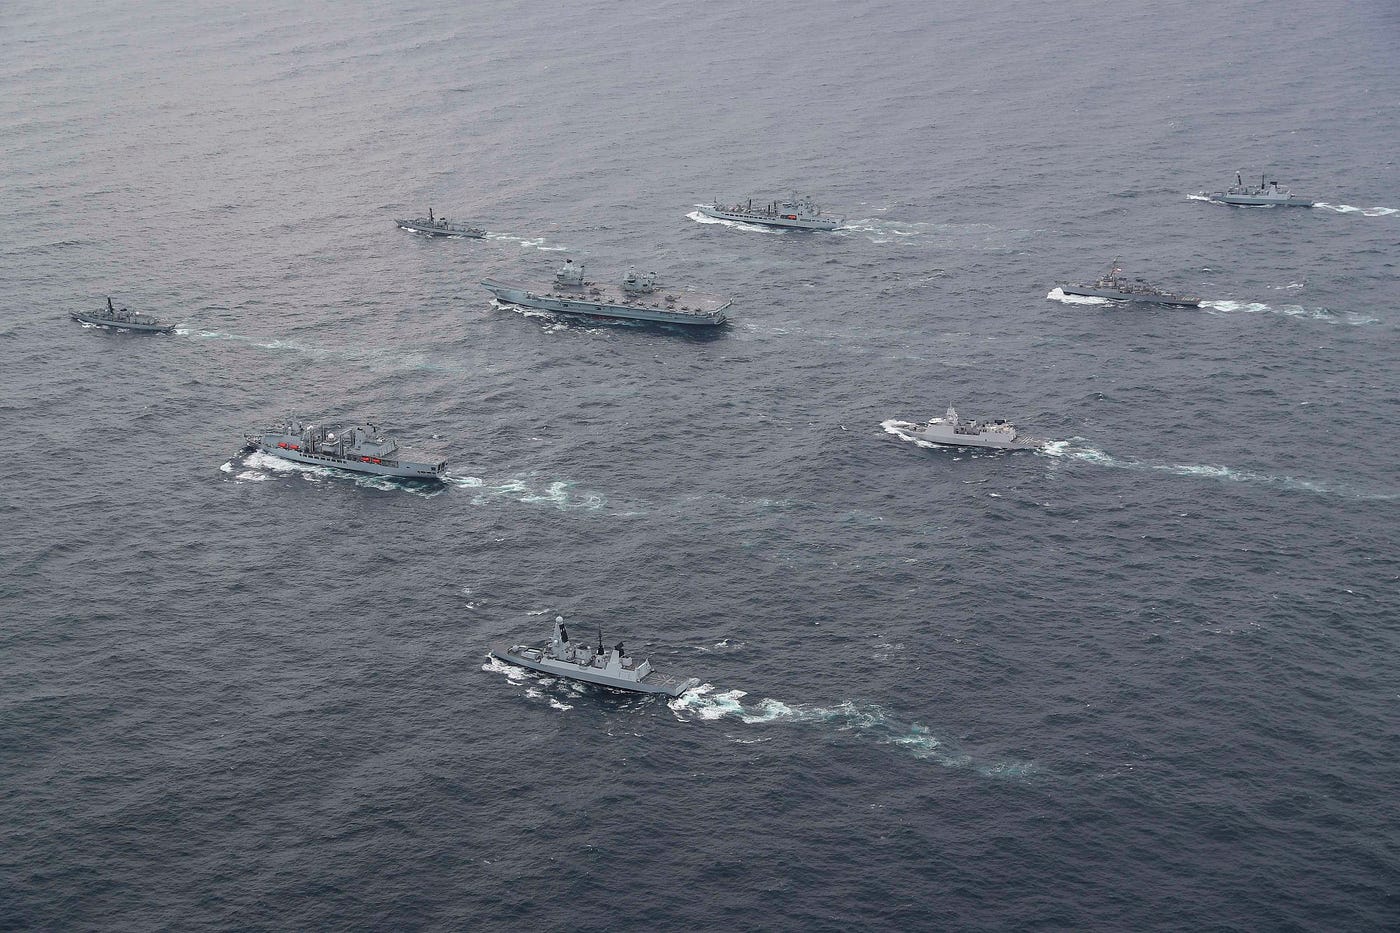 The full United Kingdom (UK) Carrier Strike Group (CSG) assembled at sea